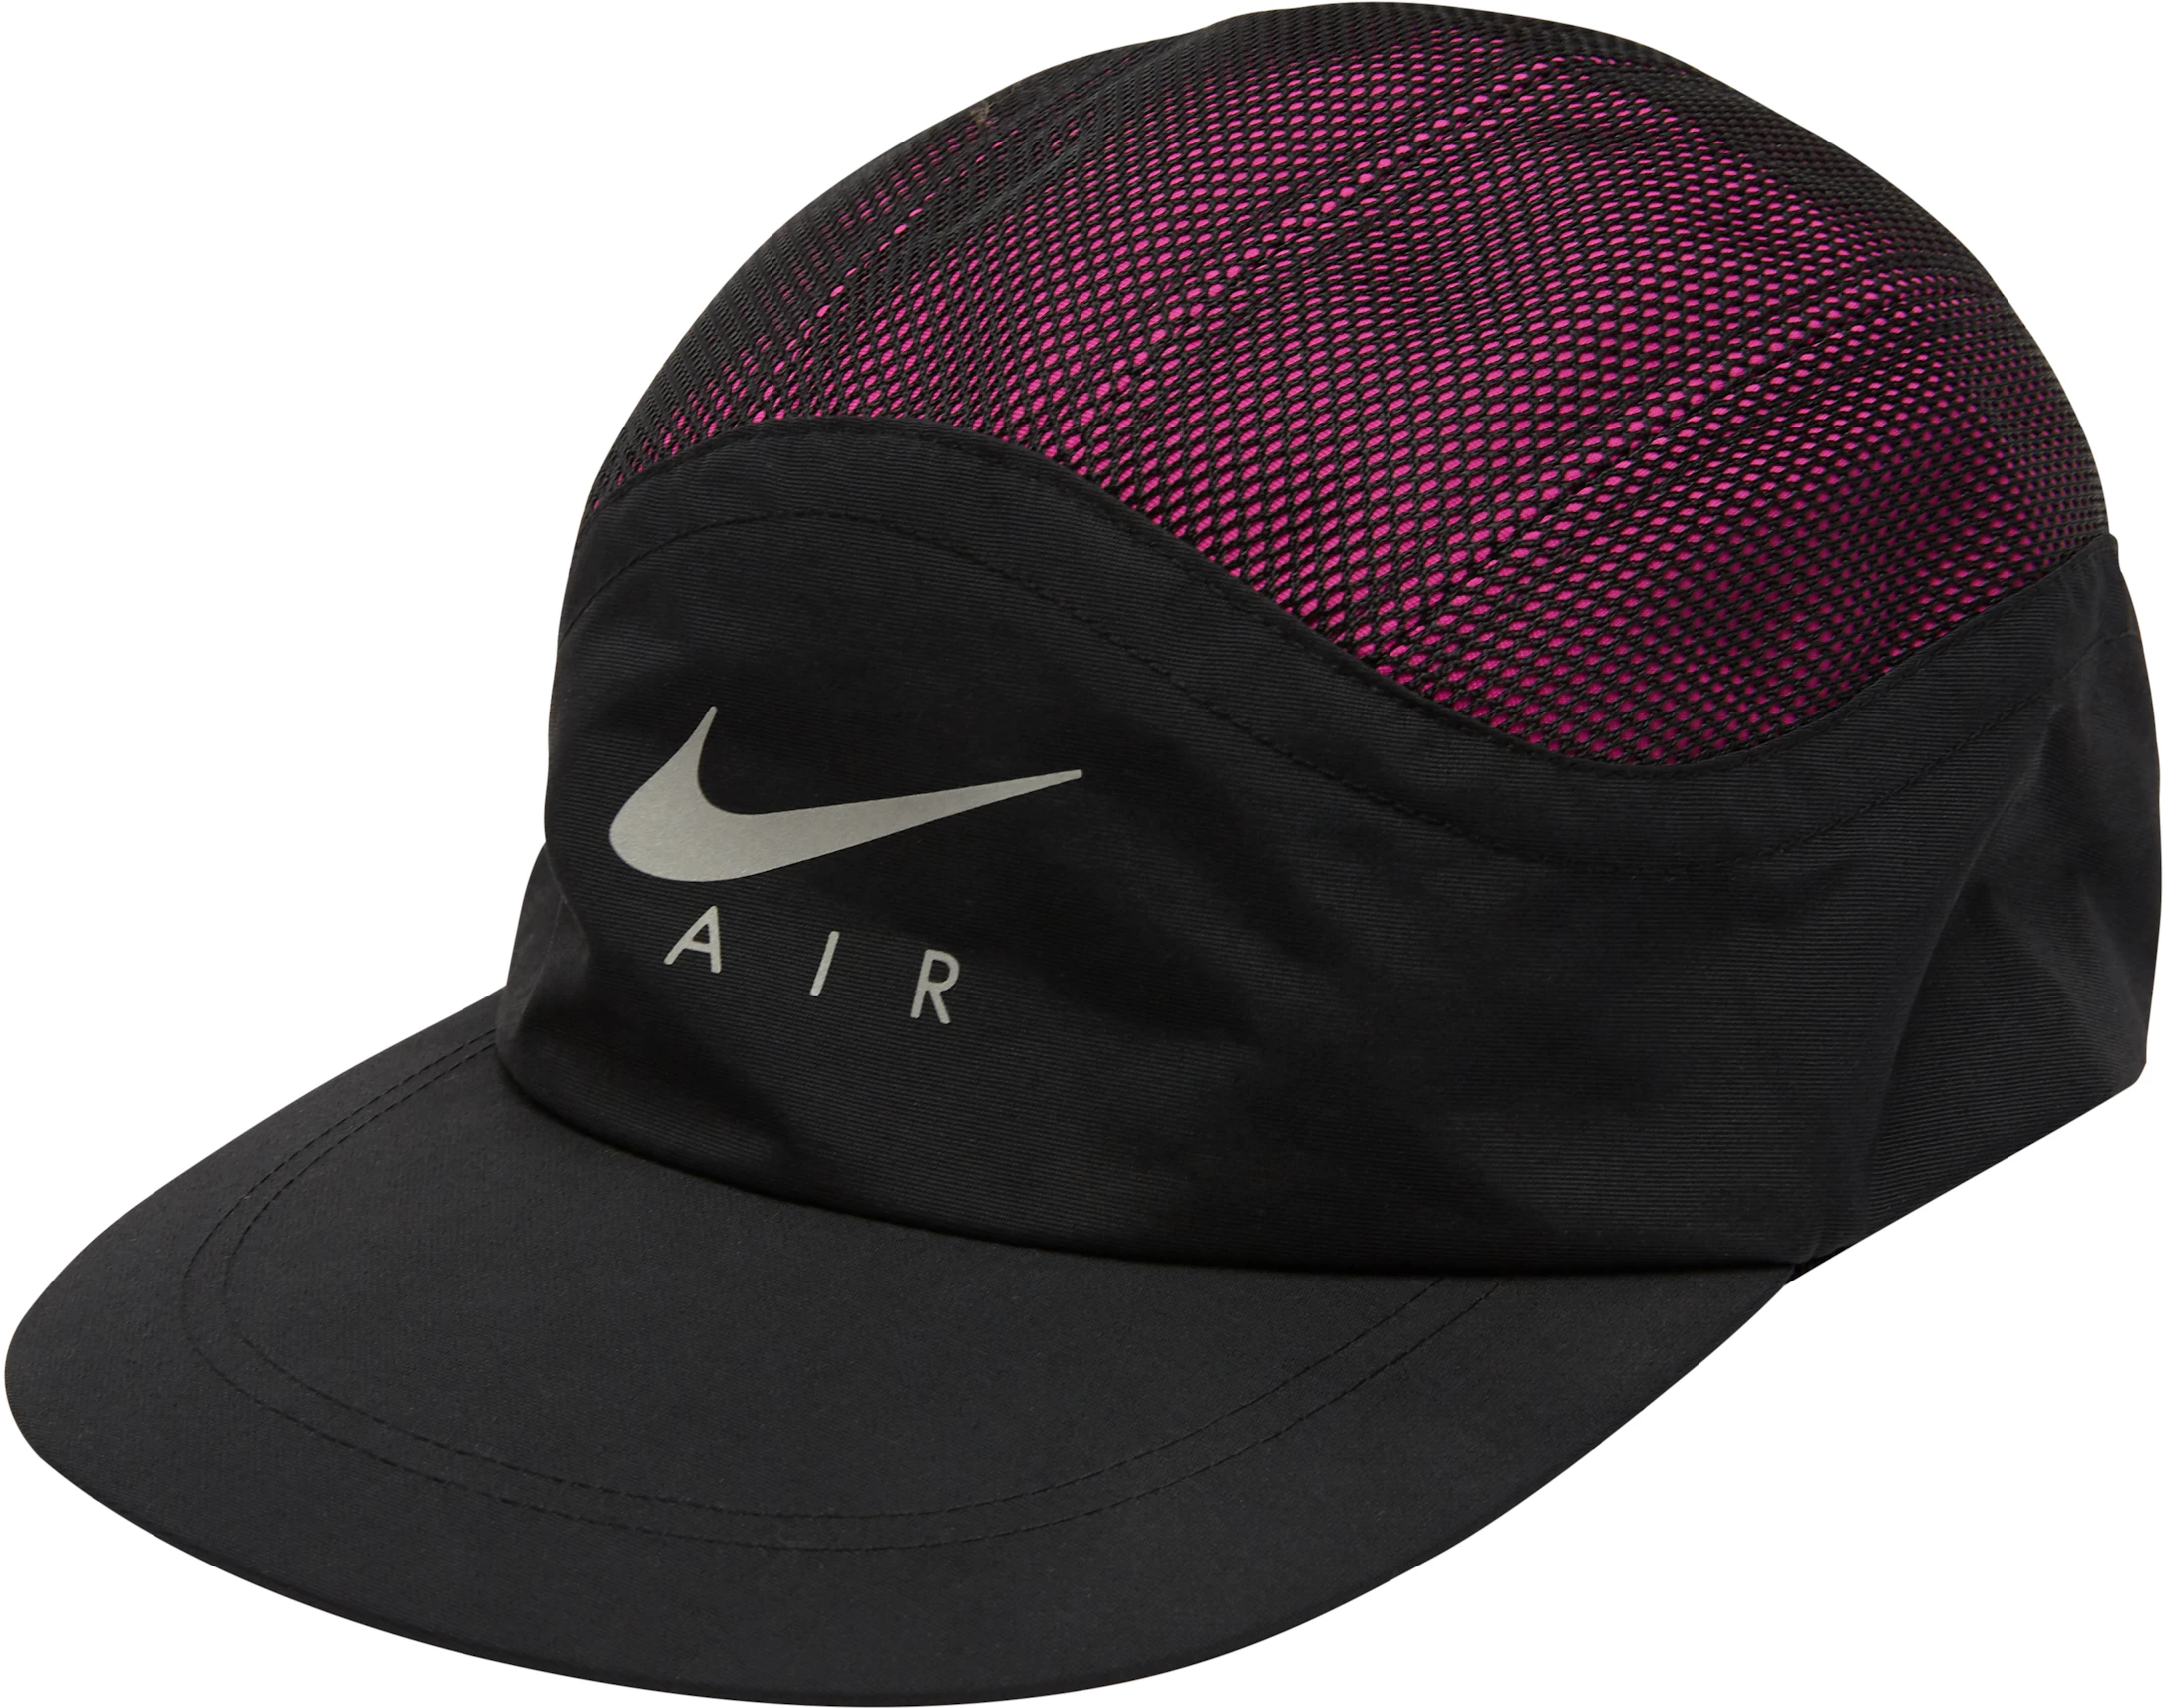 Nike Hat - FW17 - US